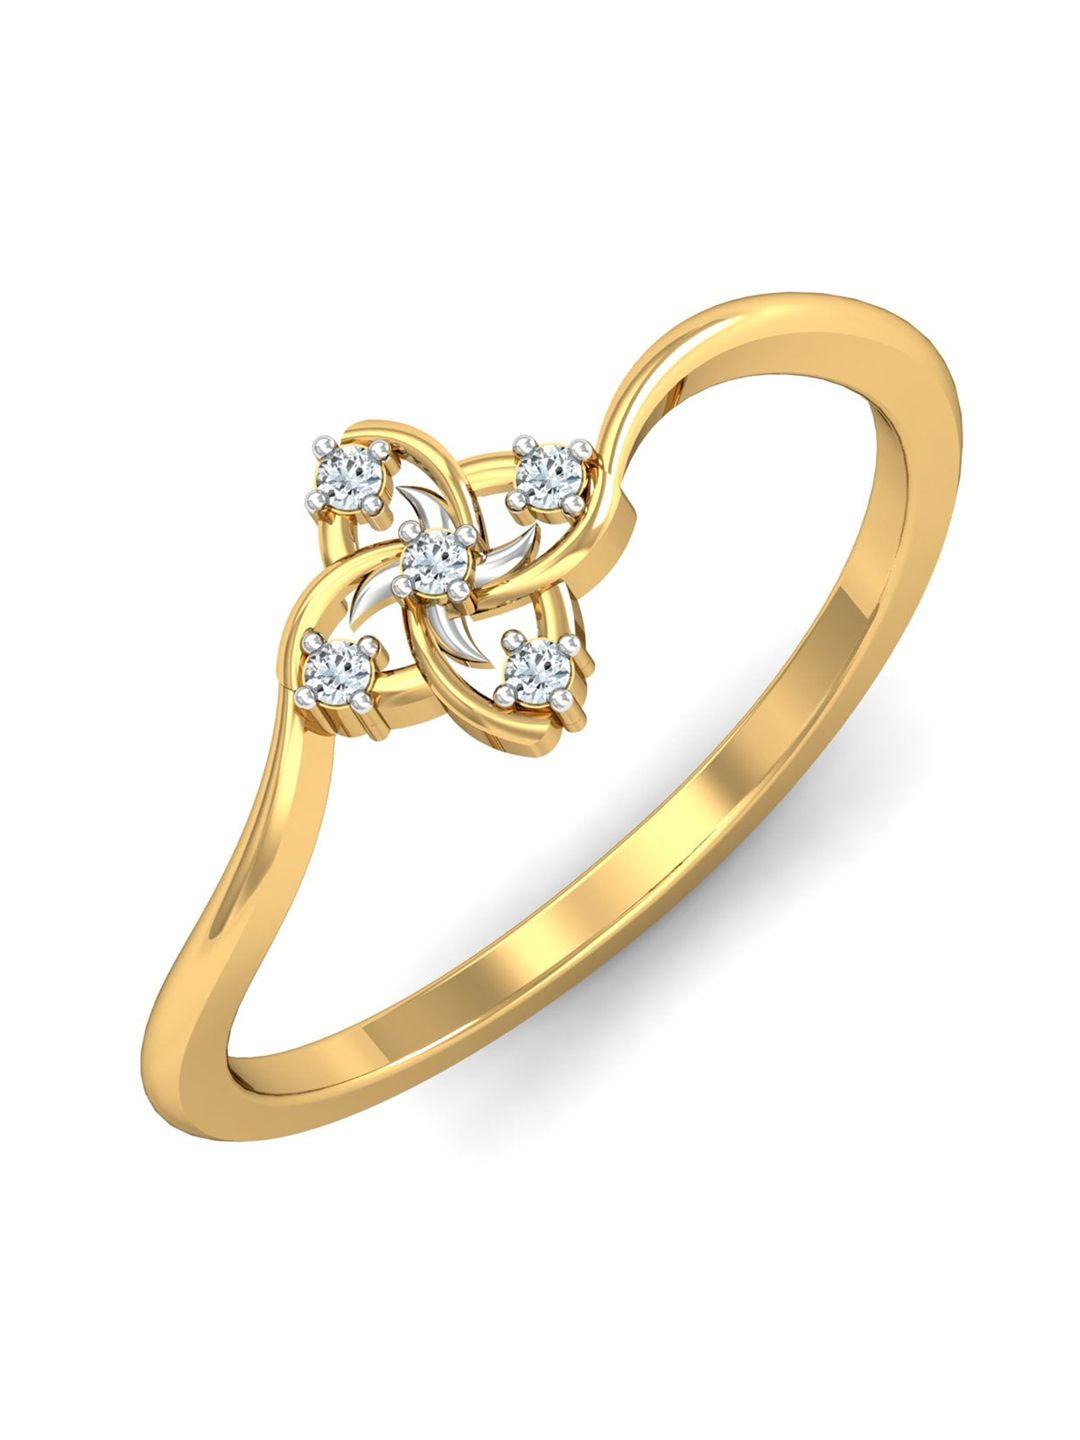 kuberbox 18kt gold diamond studded ring-1.11gm